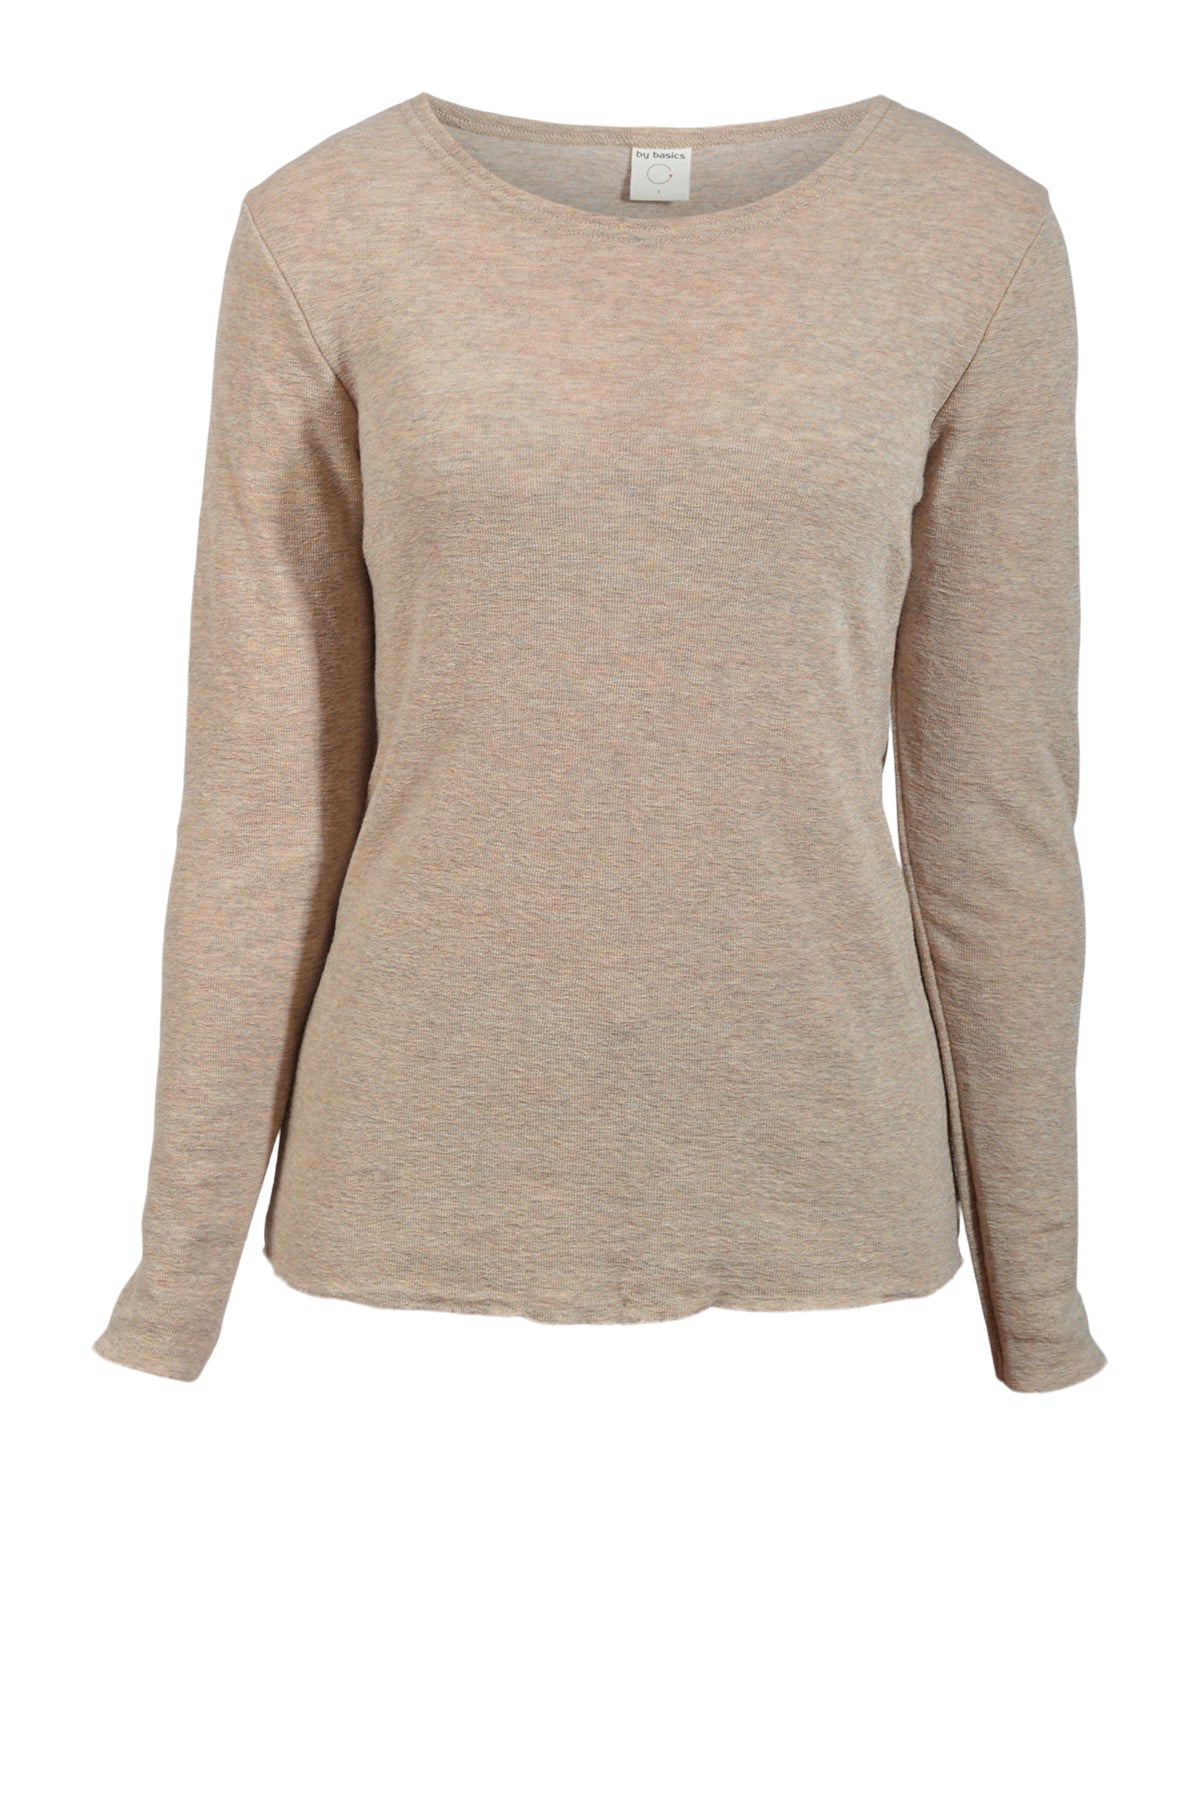 Blusbar by basic 4002 Shirt round neck L/S, Sand Melange